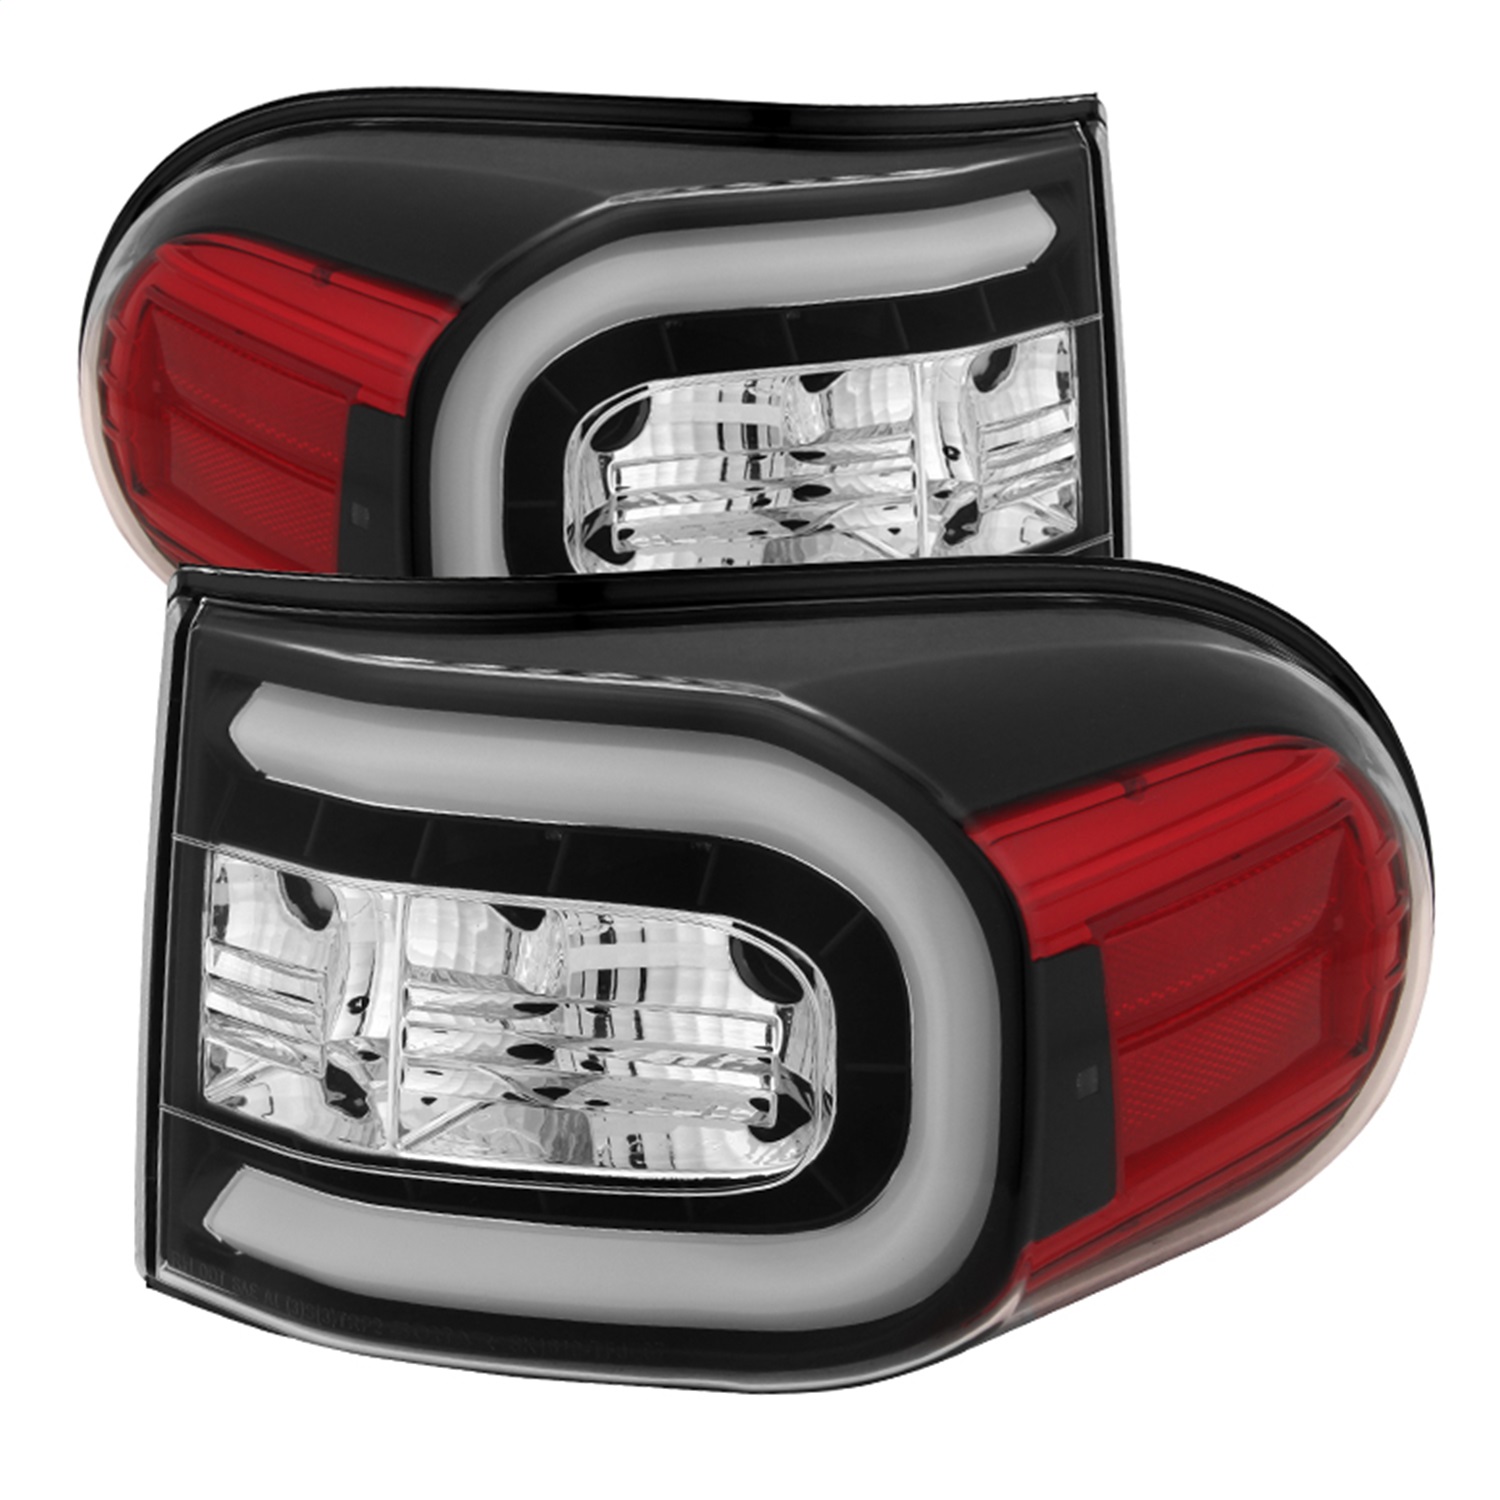 Spyder Auto 5079442 Light Bar LED Tail Lights Fits 07-13 FJ Cruiser